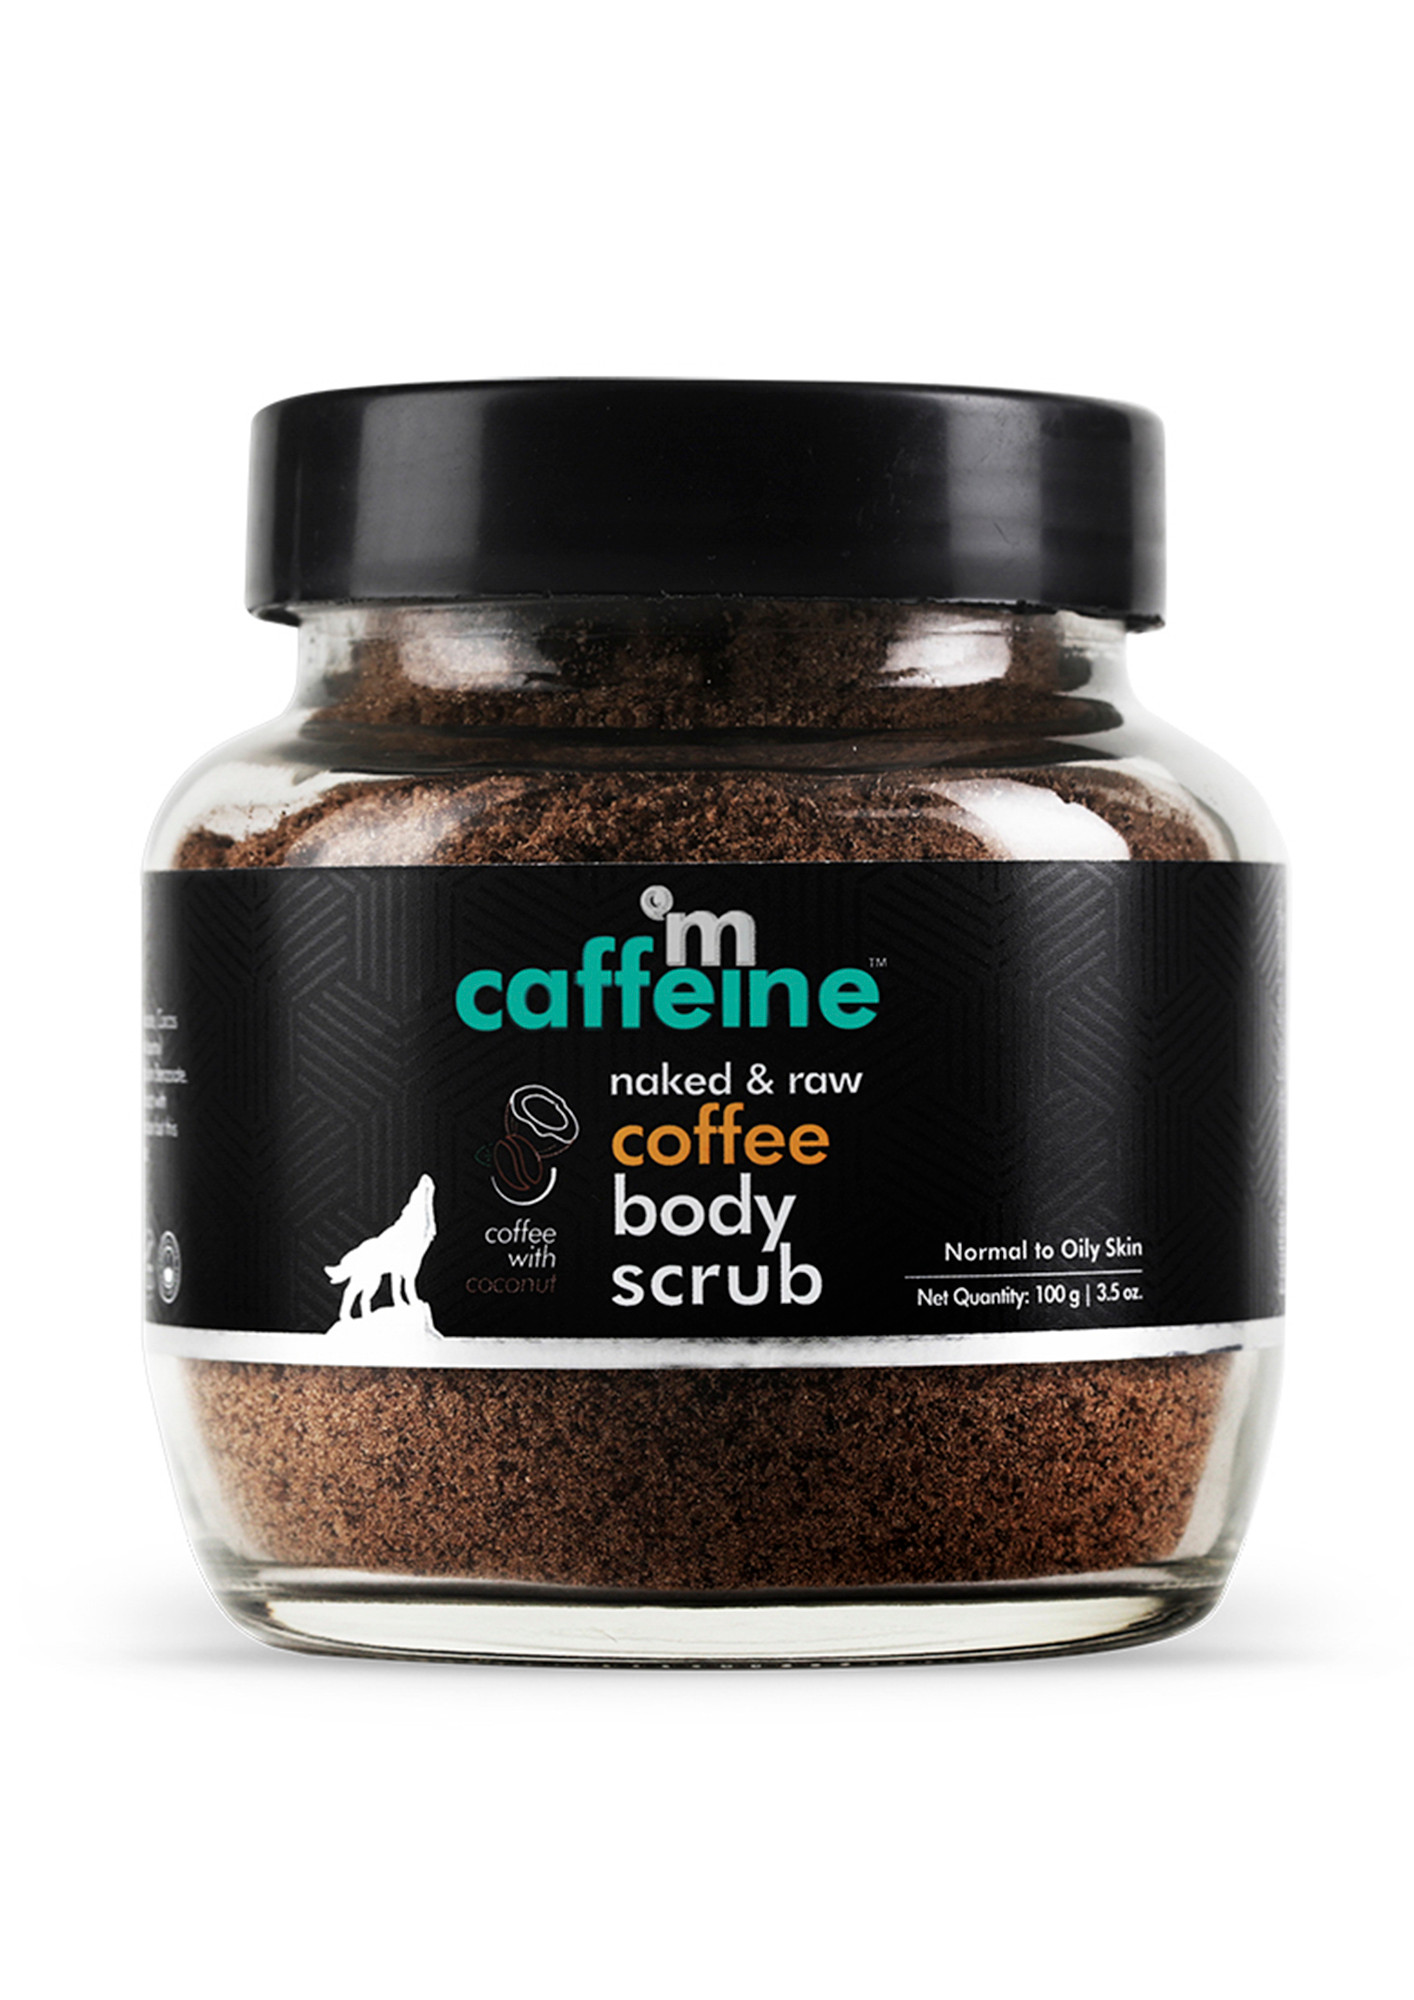 MCAFFEINE EXFOLIATING COFFEE BODY SCRUB FOR TAN REMOVAL & SOFT-SMOOTH SKIN - 100% NATURAL & VEGAN (100 GM)